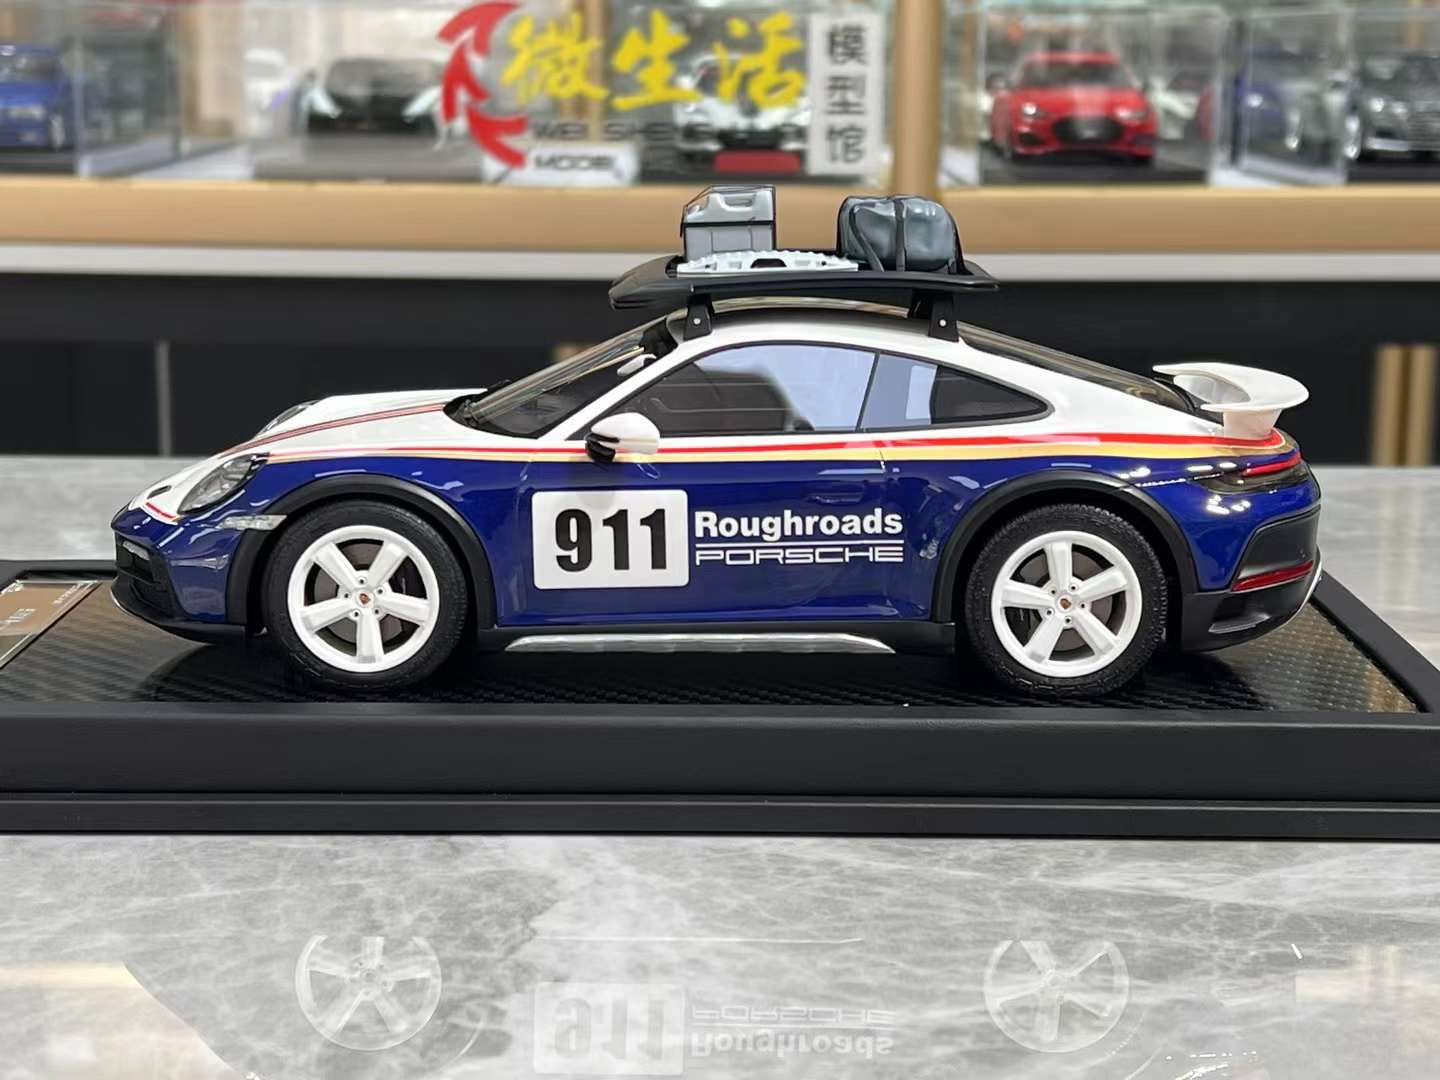 VIP Scale Models 1:18 Porsche 911 992 Dakar - Green Limited Edition of  99pcs. *No opening parts السعر : 120 دينار👍 #vipscalemodels…